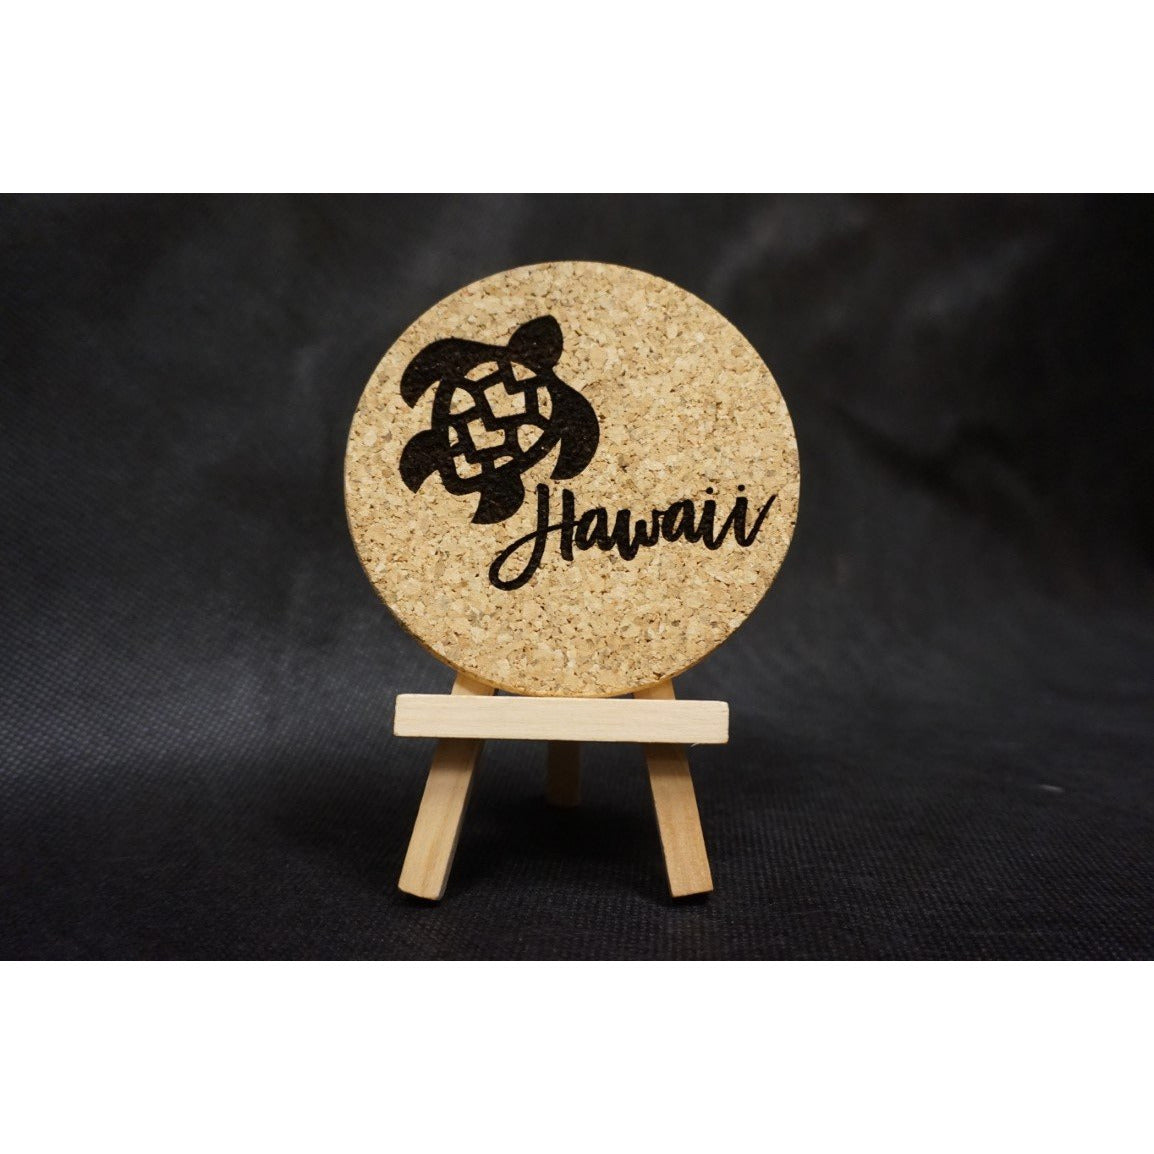 Set of 4 Cork Coasters - Local Hawaiian Designs